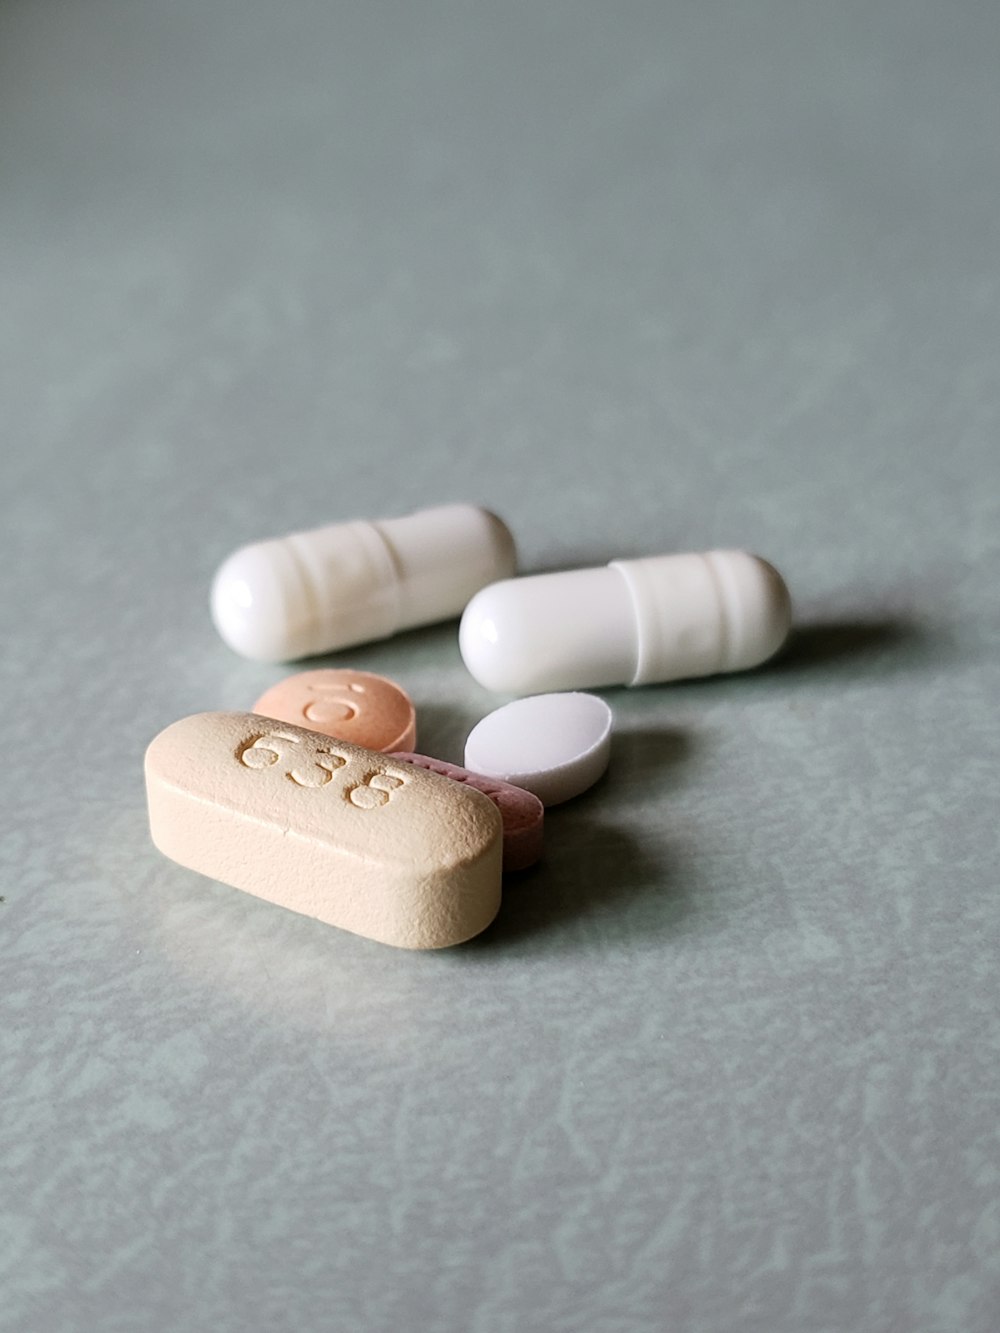 white medication pill on gray textile